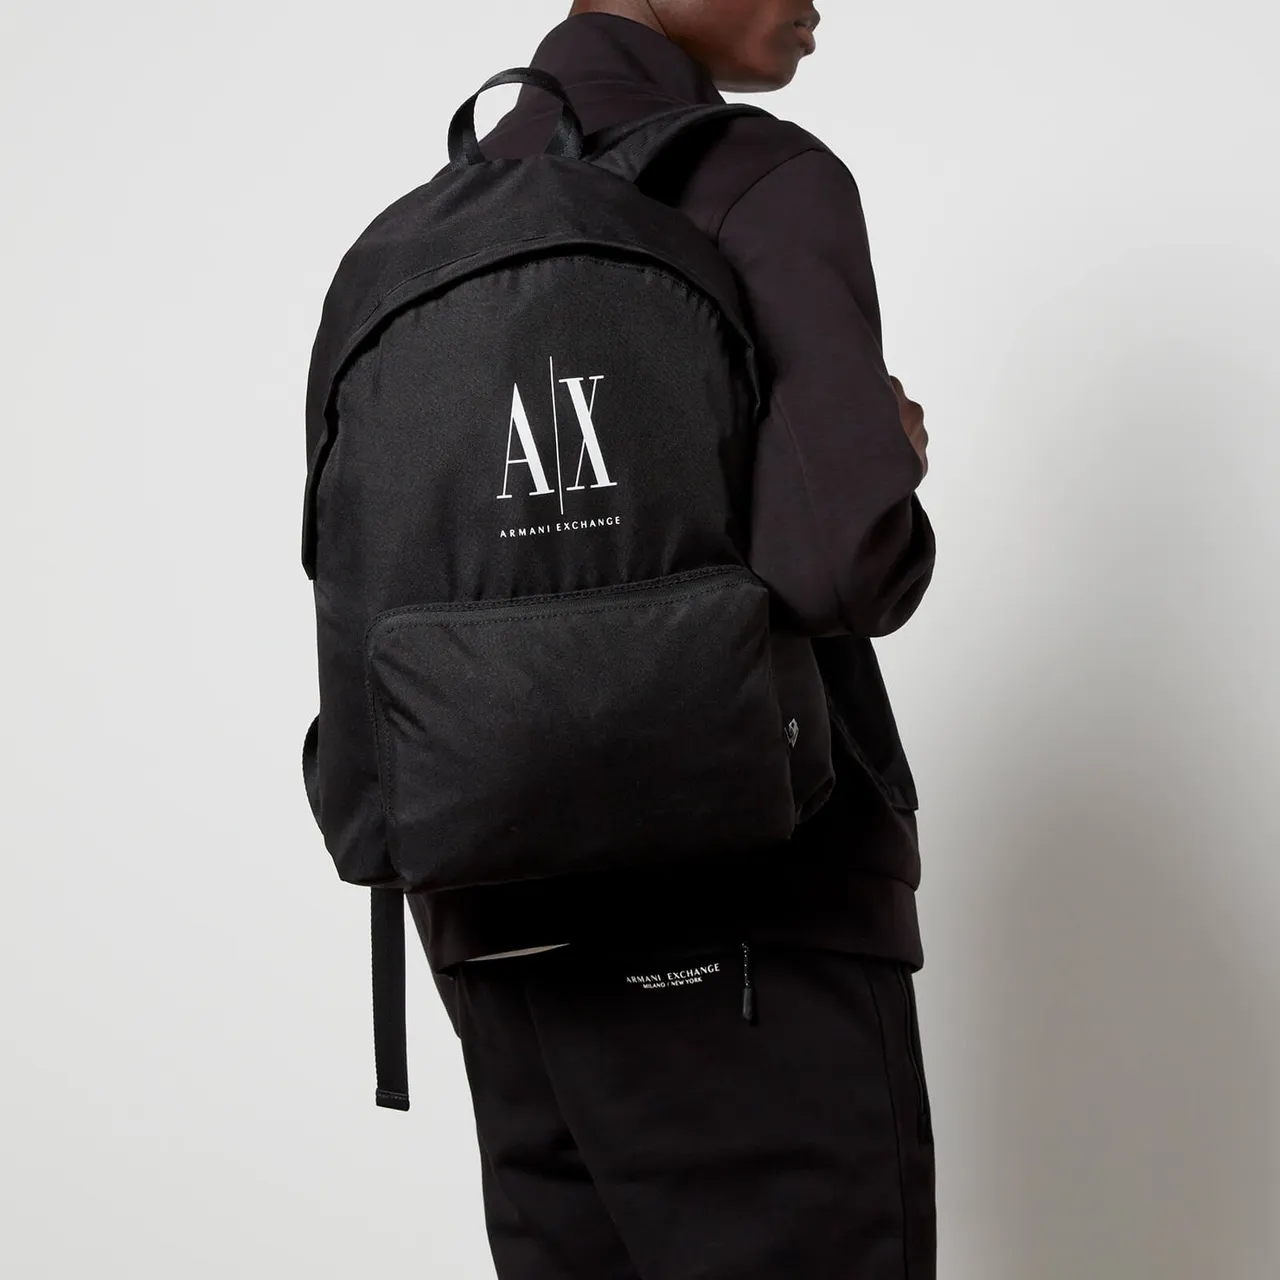 Armani Exchange Men's AX Logo Nylon Backpack - Black